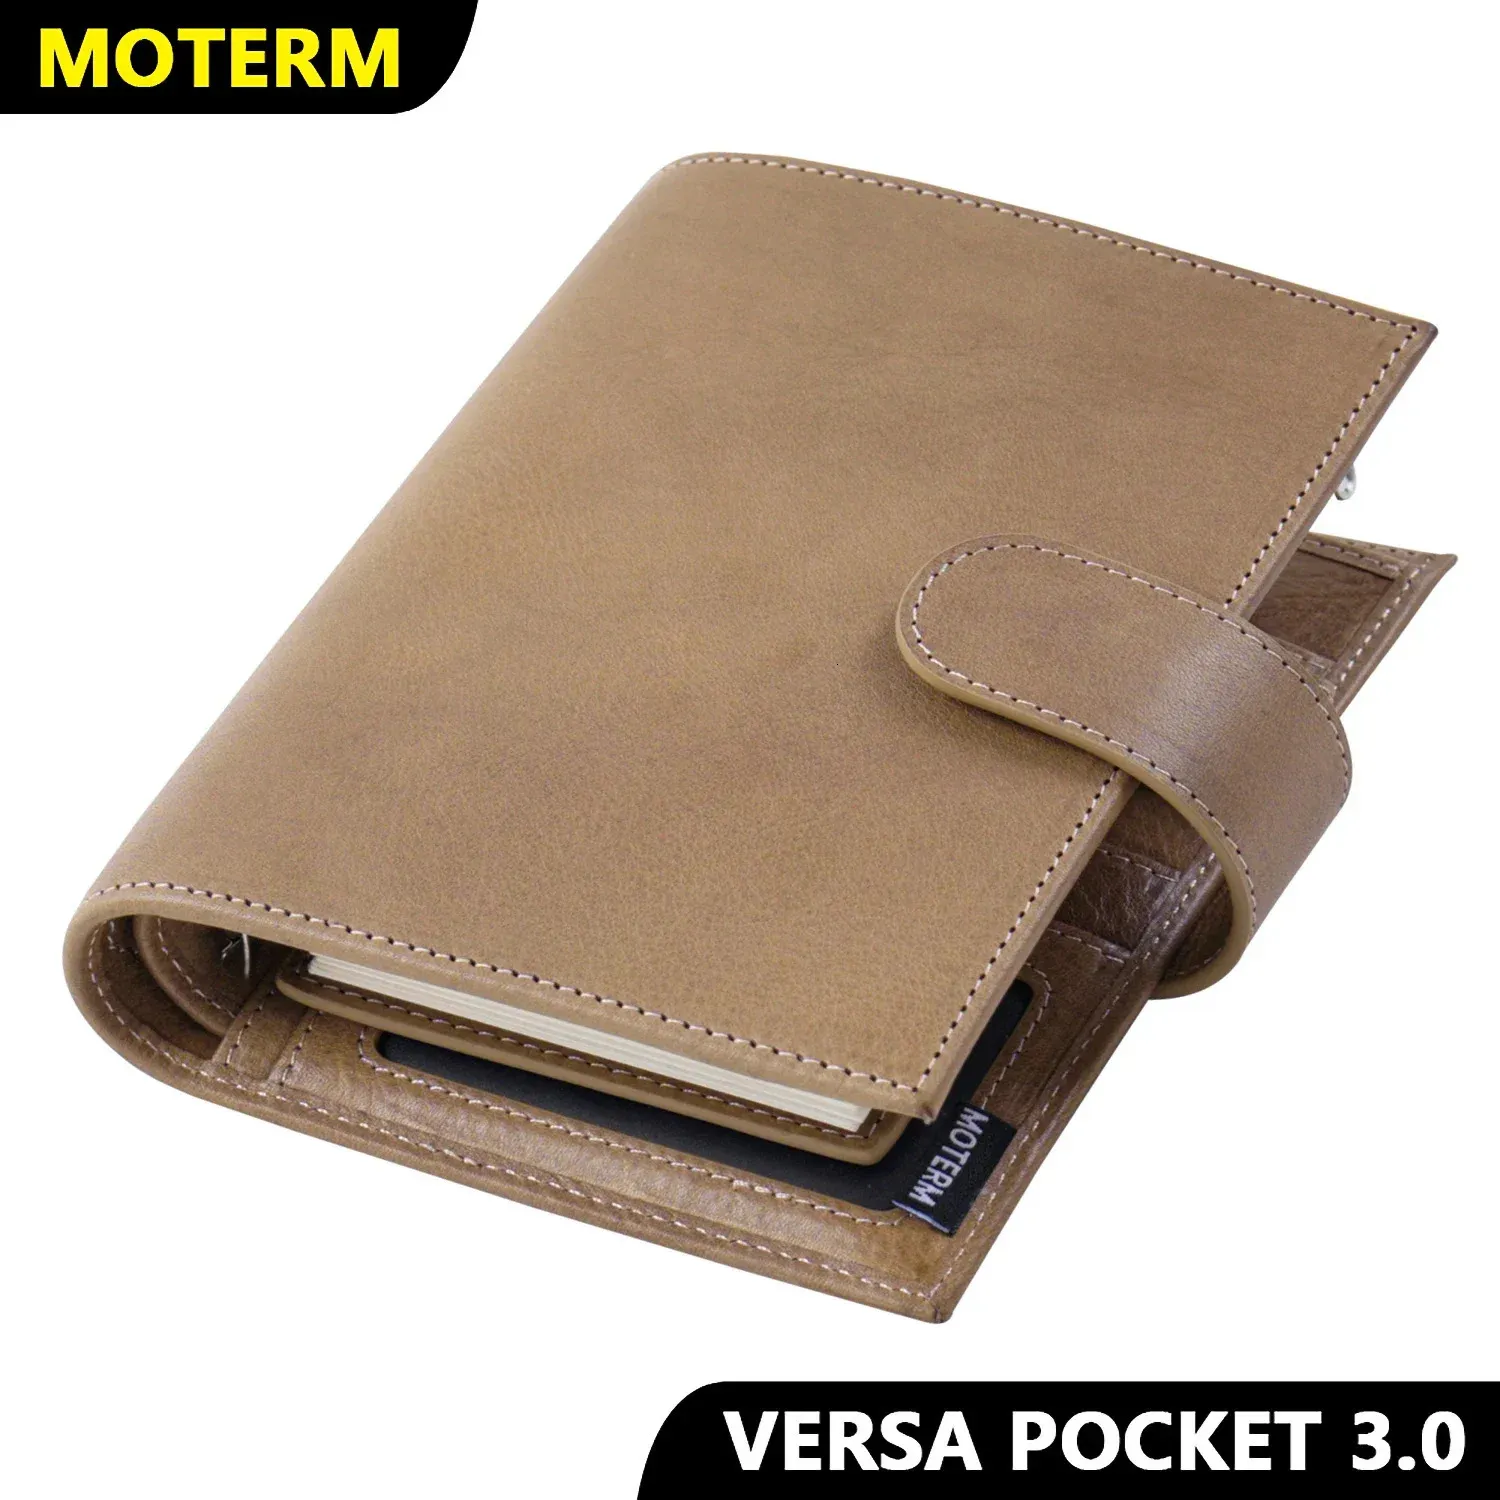 Moterm Pocket Versa 30 Ringen Planner Volnerf Plantaardig Gelooid met 19mm Portemonnee Multifunctionele Agenda Dagboek Journal Kladblok 240311